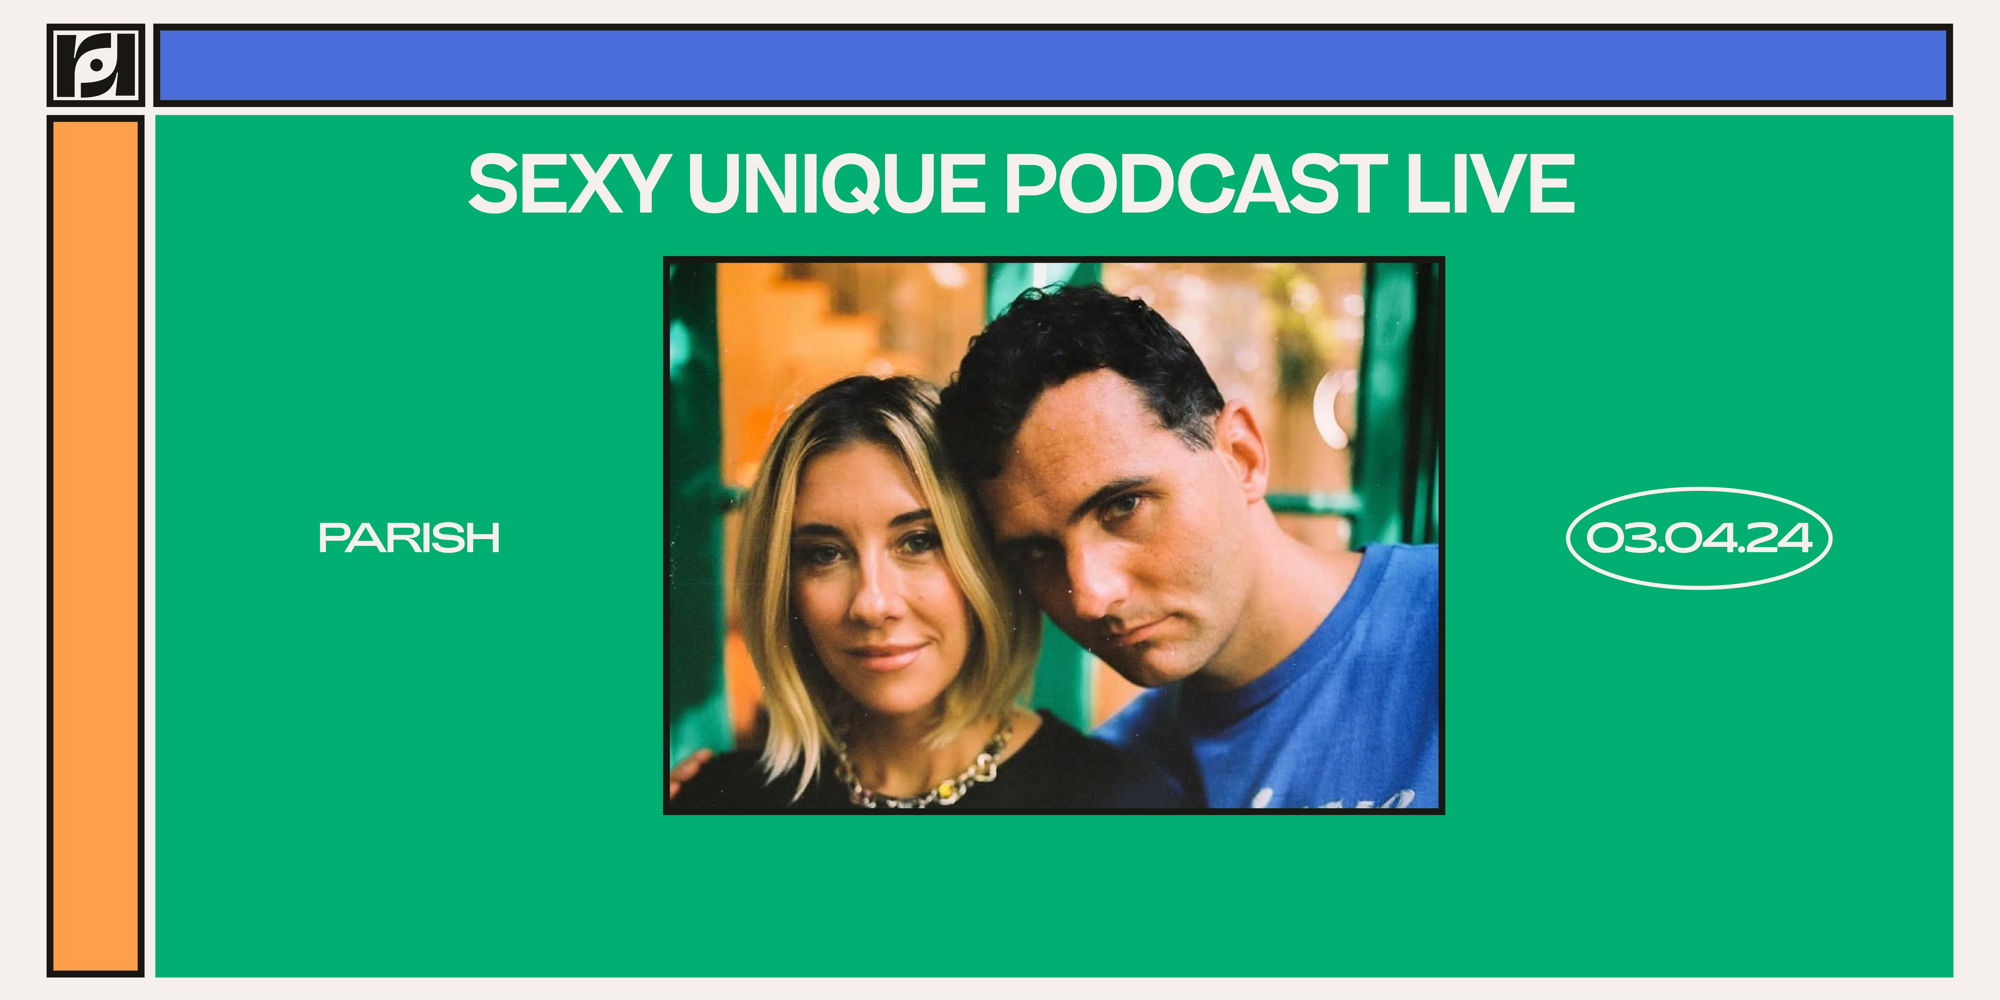 Sexy Unique Podcast Live at Parish  promotional image